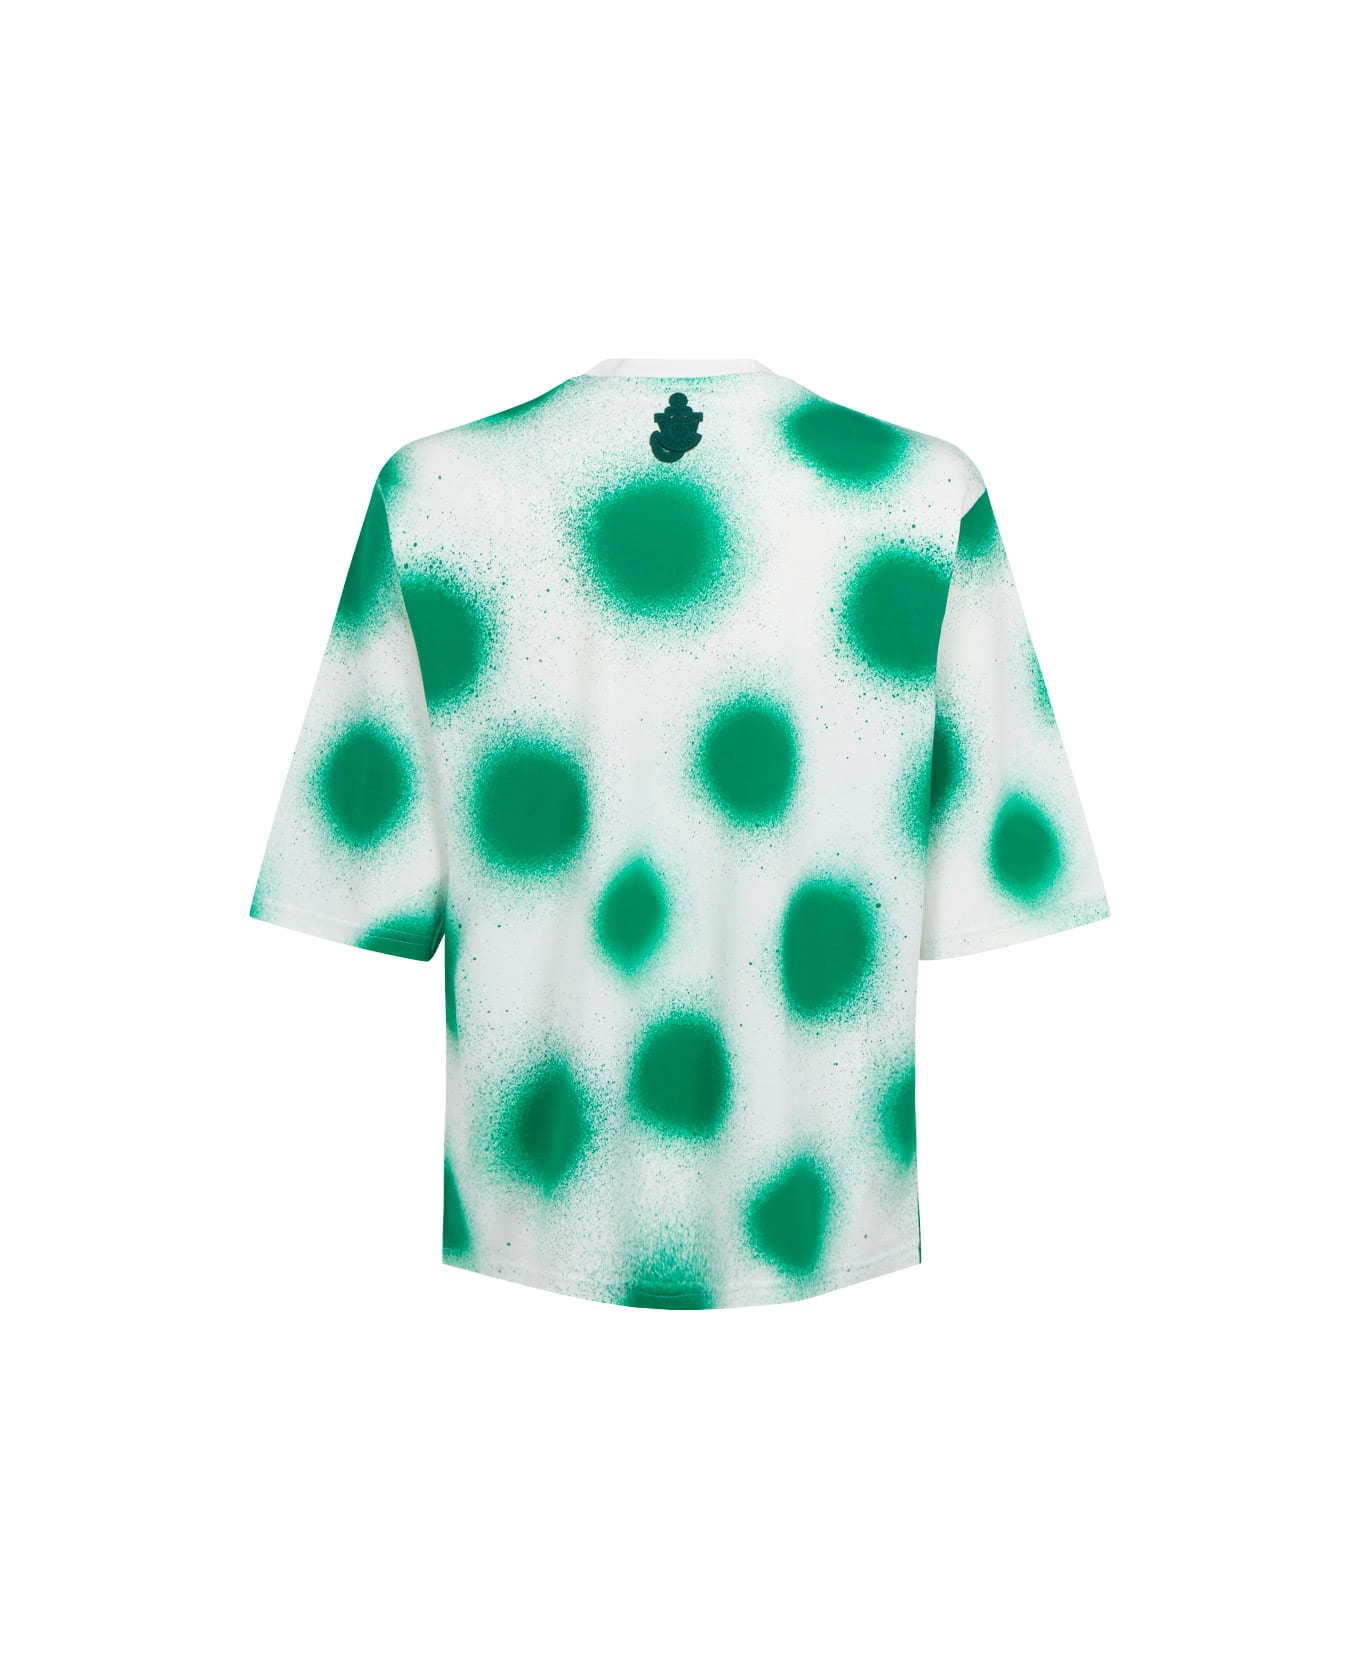 Moncler Genius T-shirt - Bianco/verde